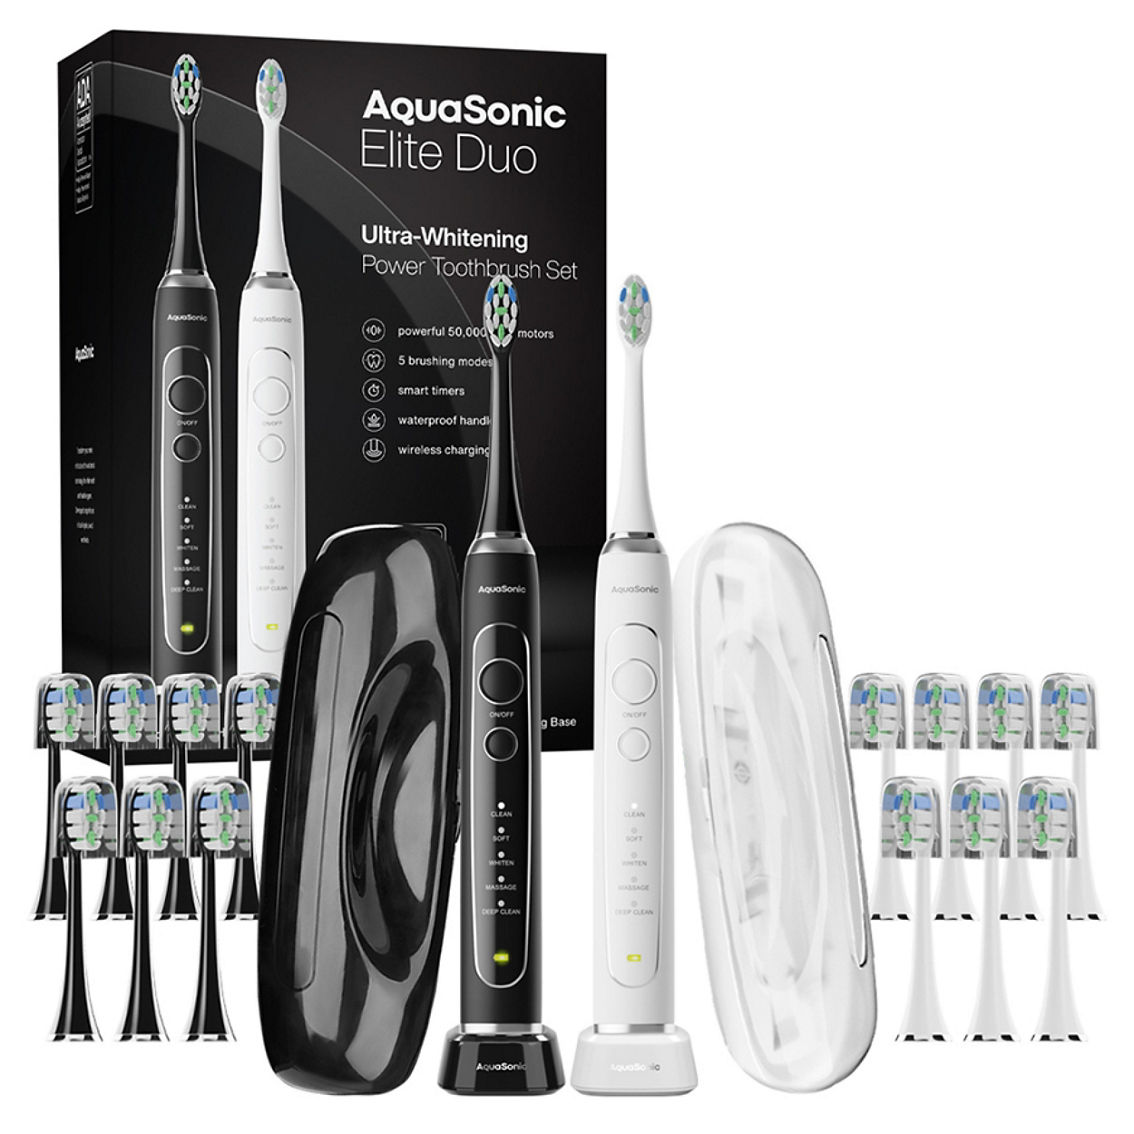 AquaSonic Elite Duo Series Black and White Electric Toothbrush Set - Image 2 of 5